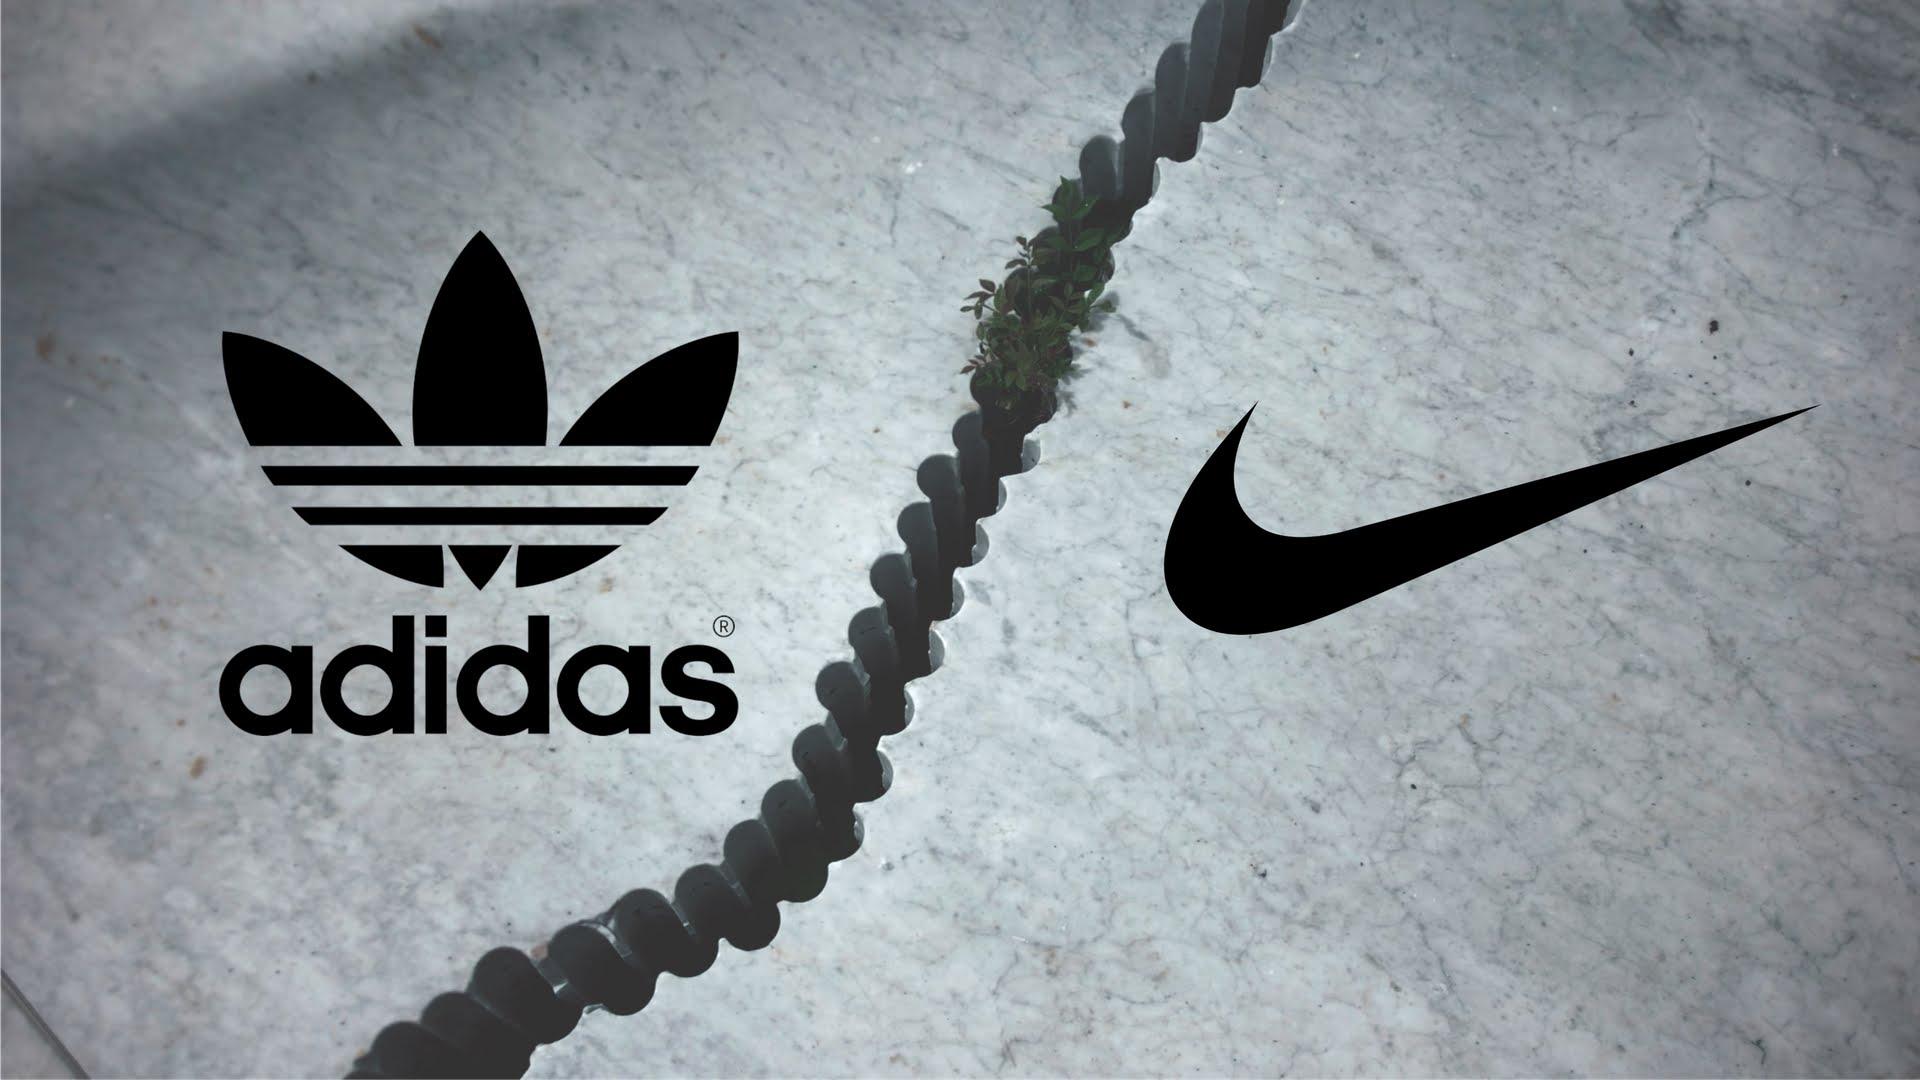 Adidas and Nike wallpaper - Adidas, Nike